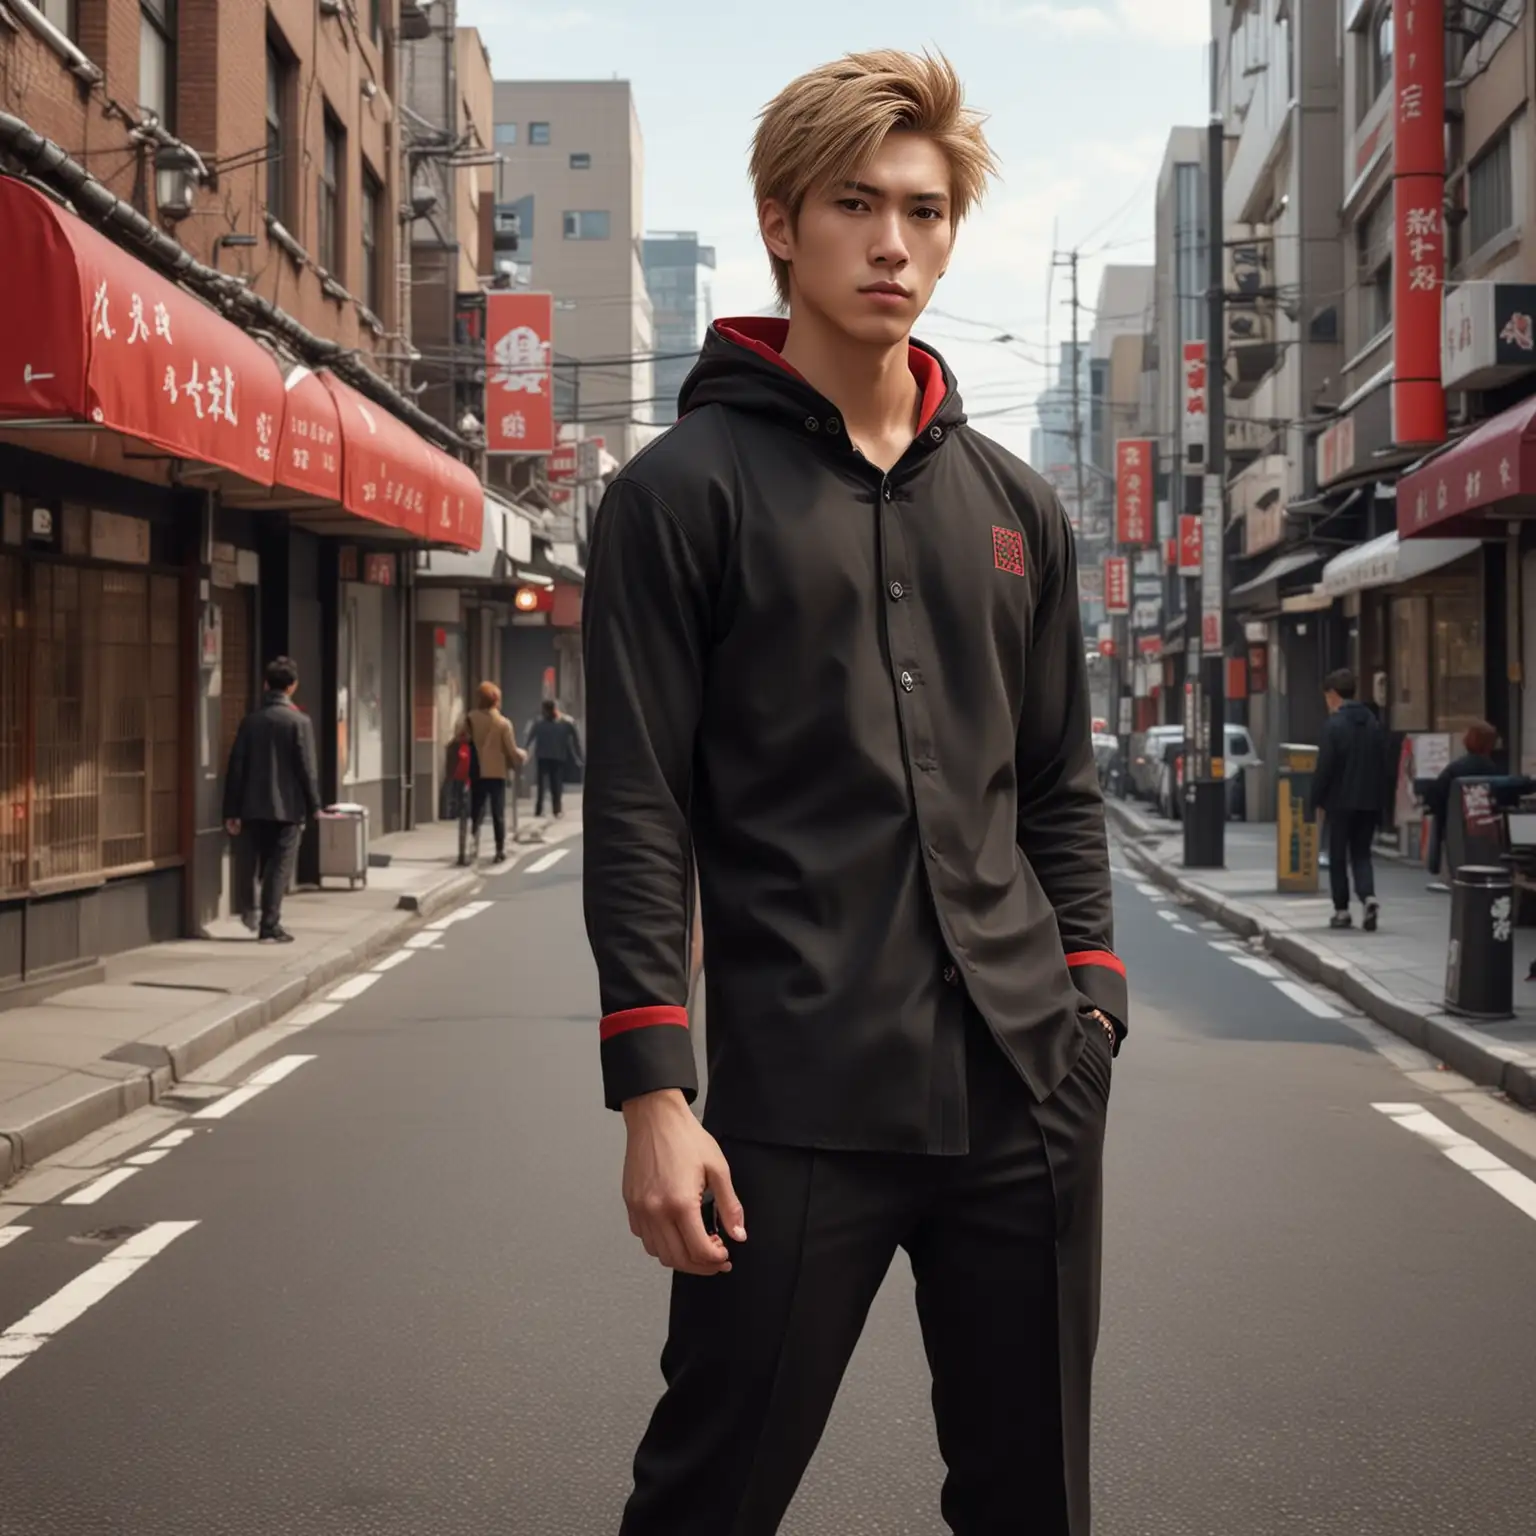 Young Man in Japanese School Uniform Walking Tokyo Streets